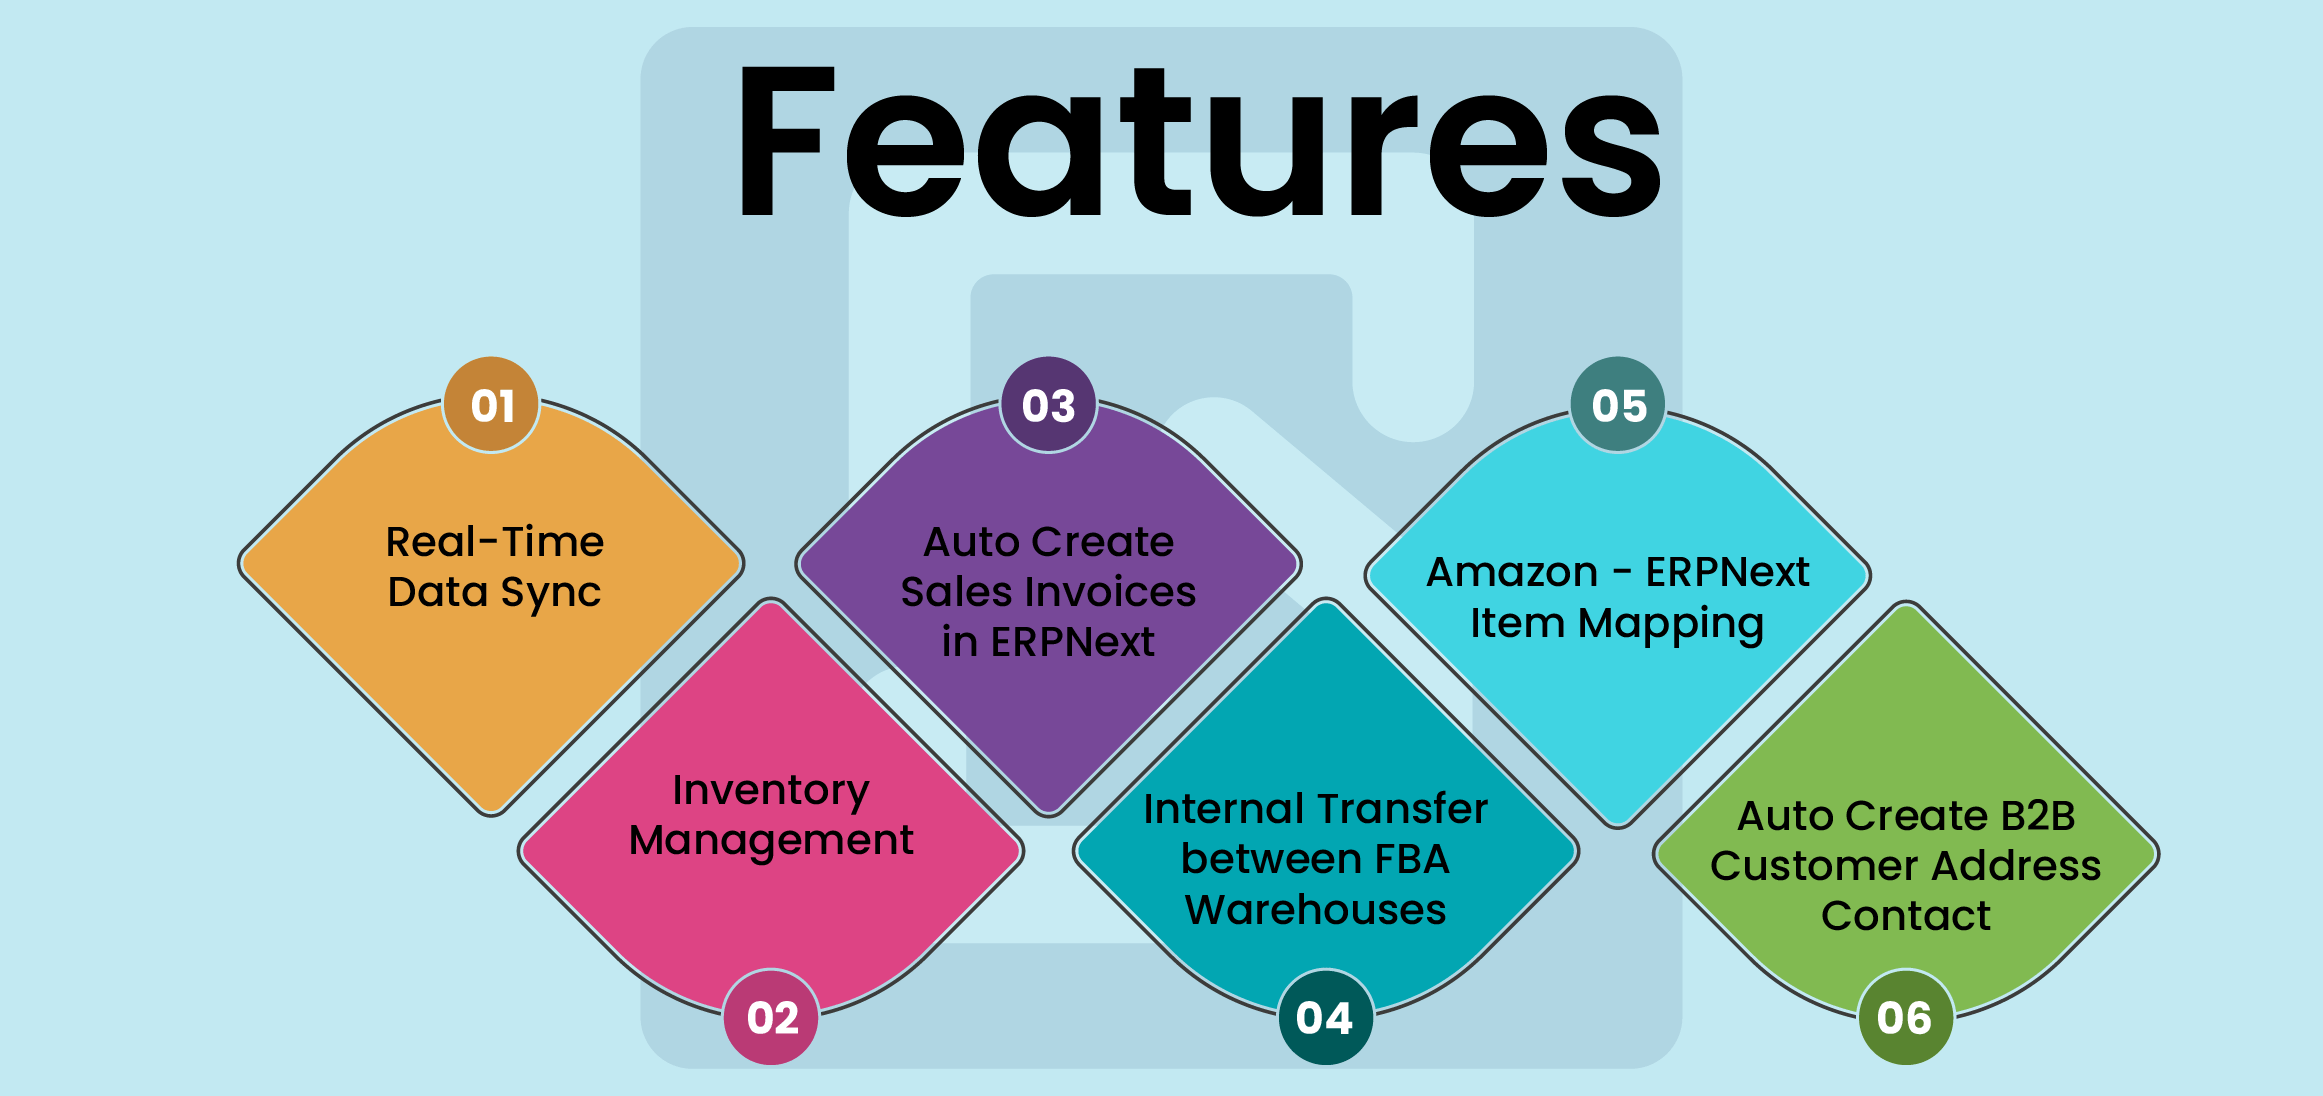 Amazon-ERPNext Features